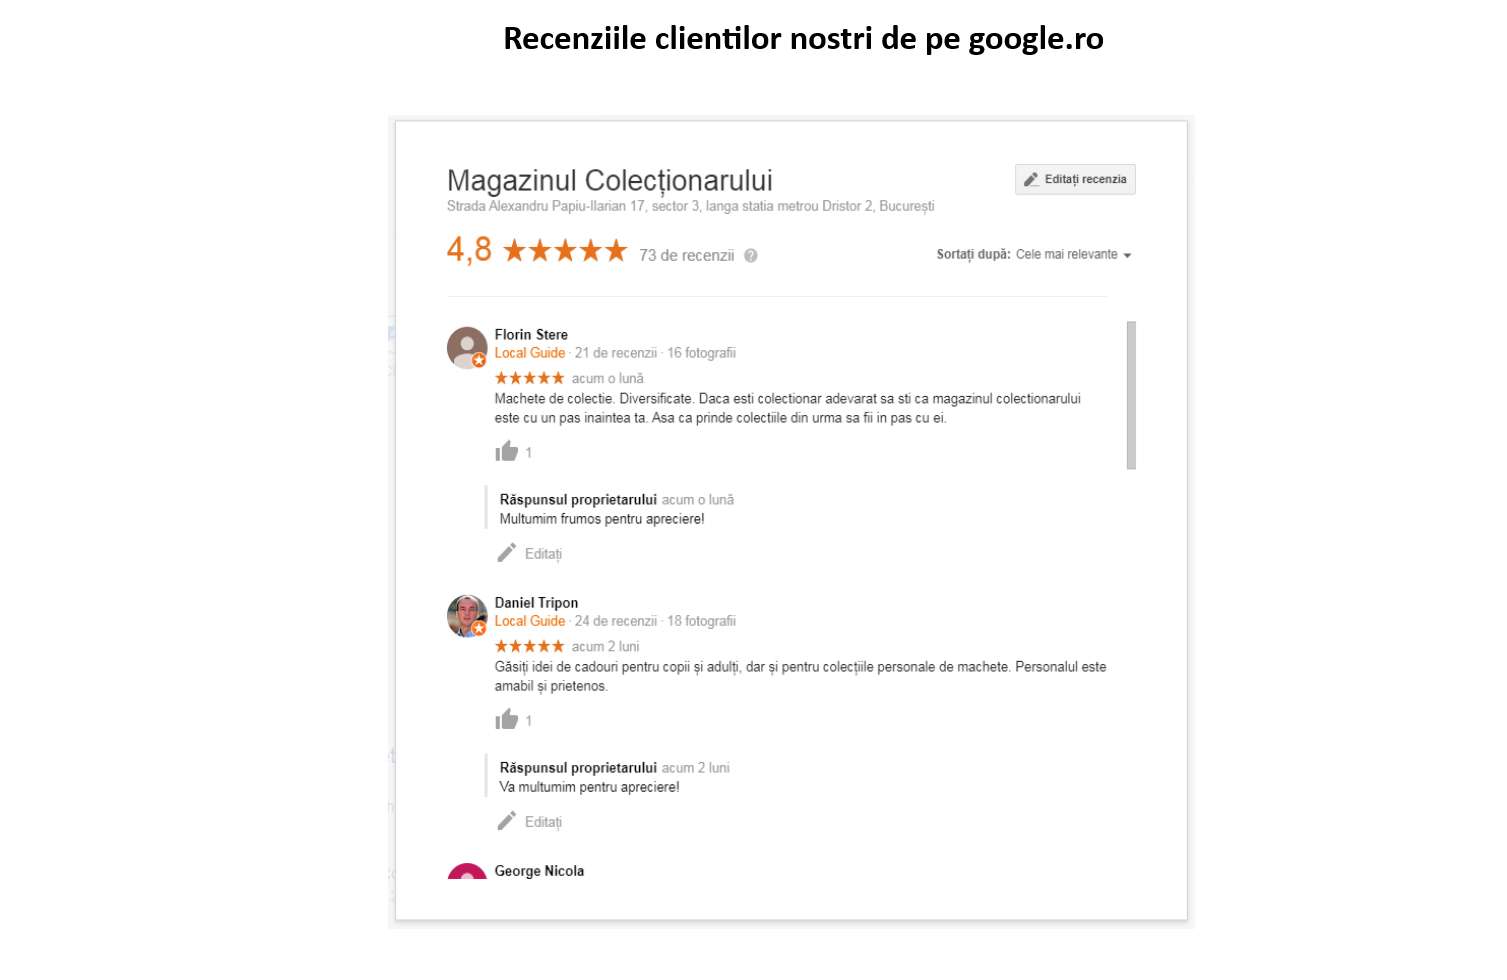 Recenzii de la clientii nostri de pe Google.ro